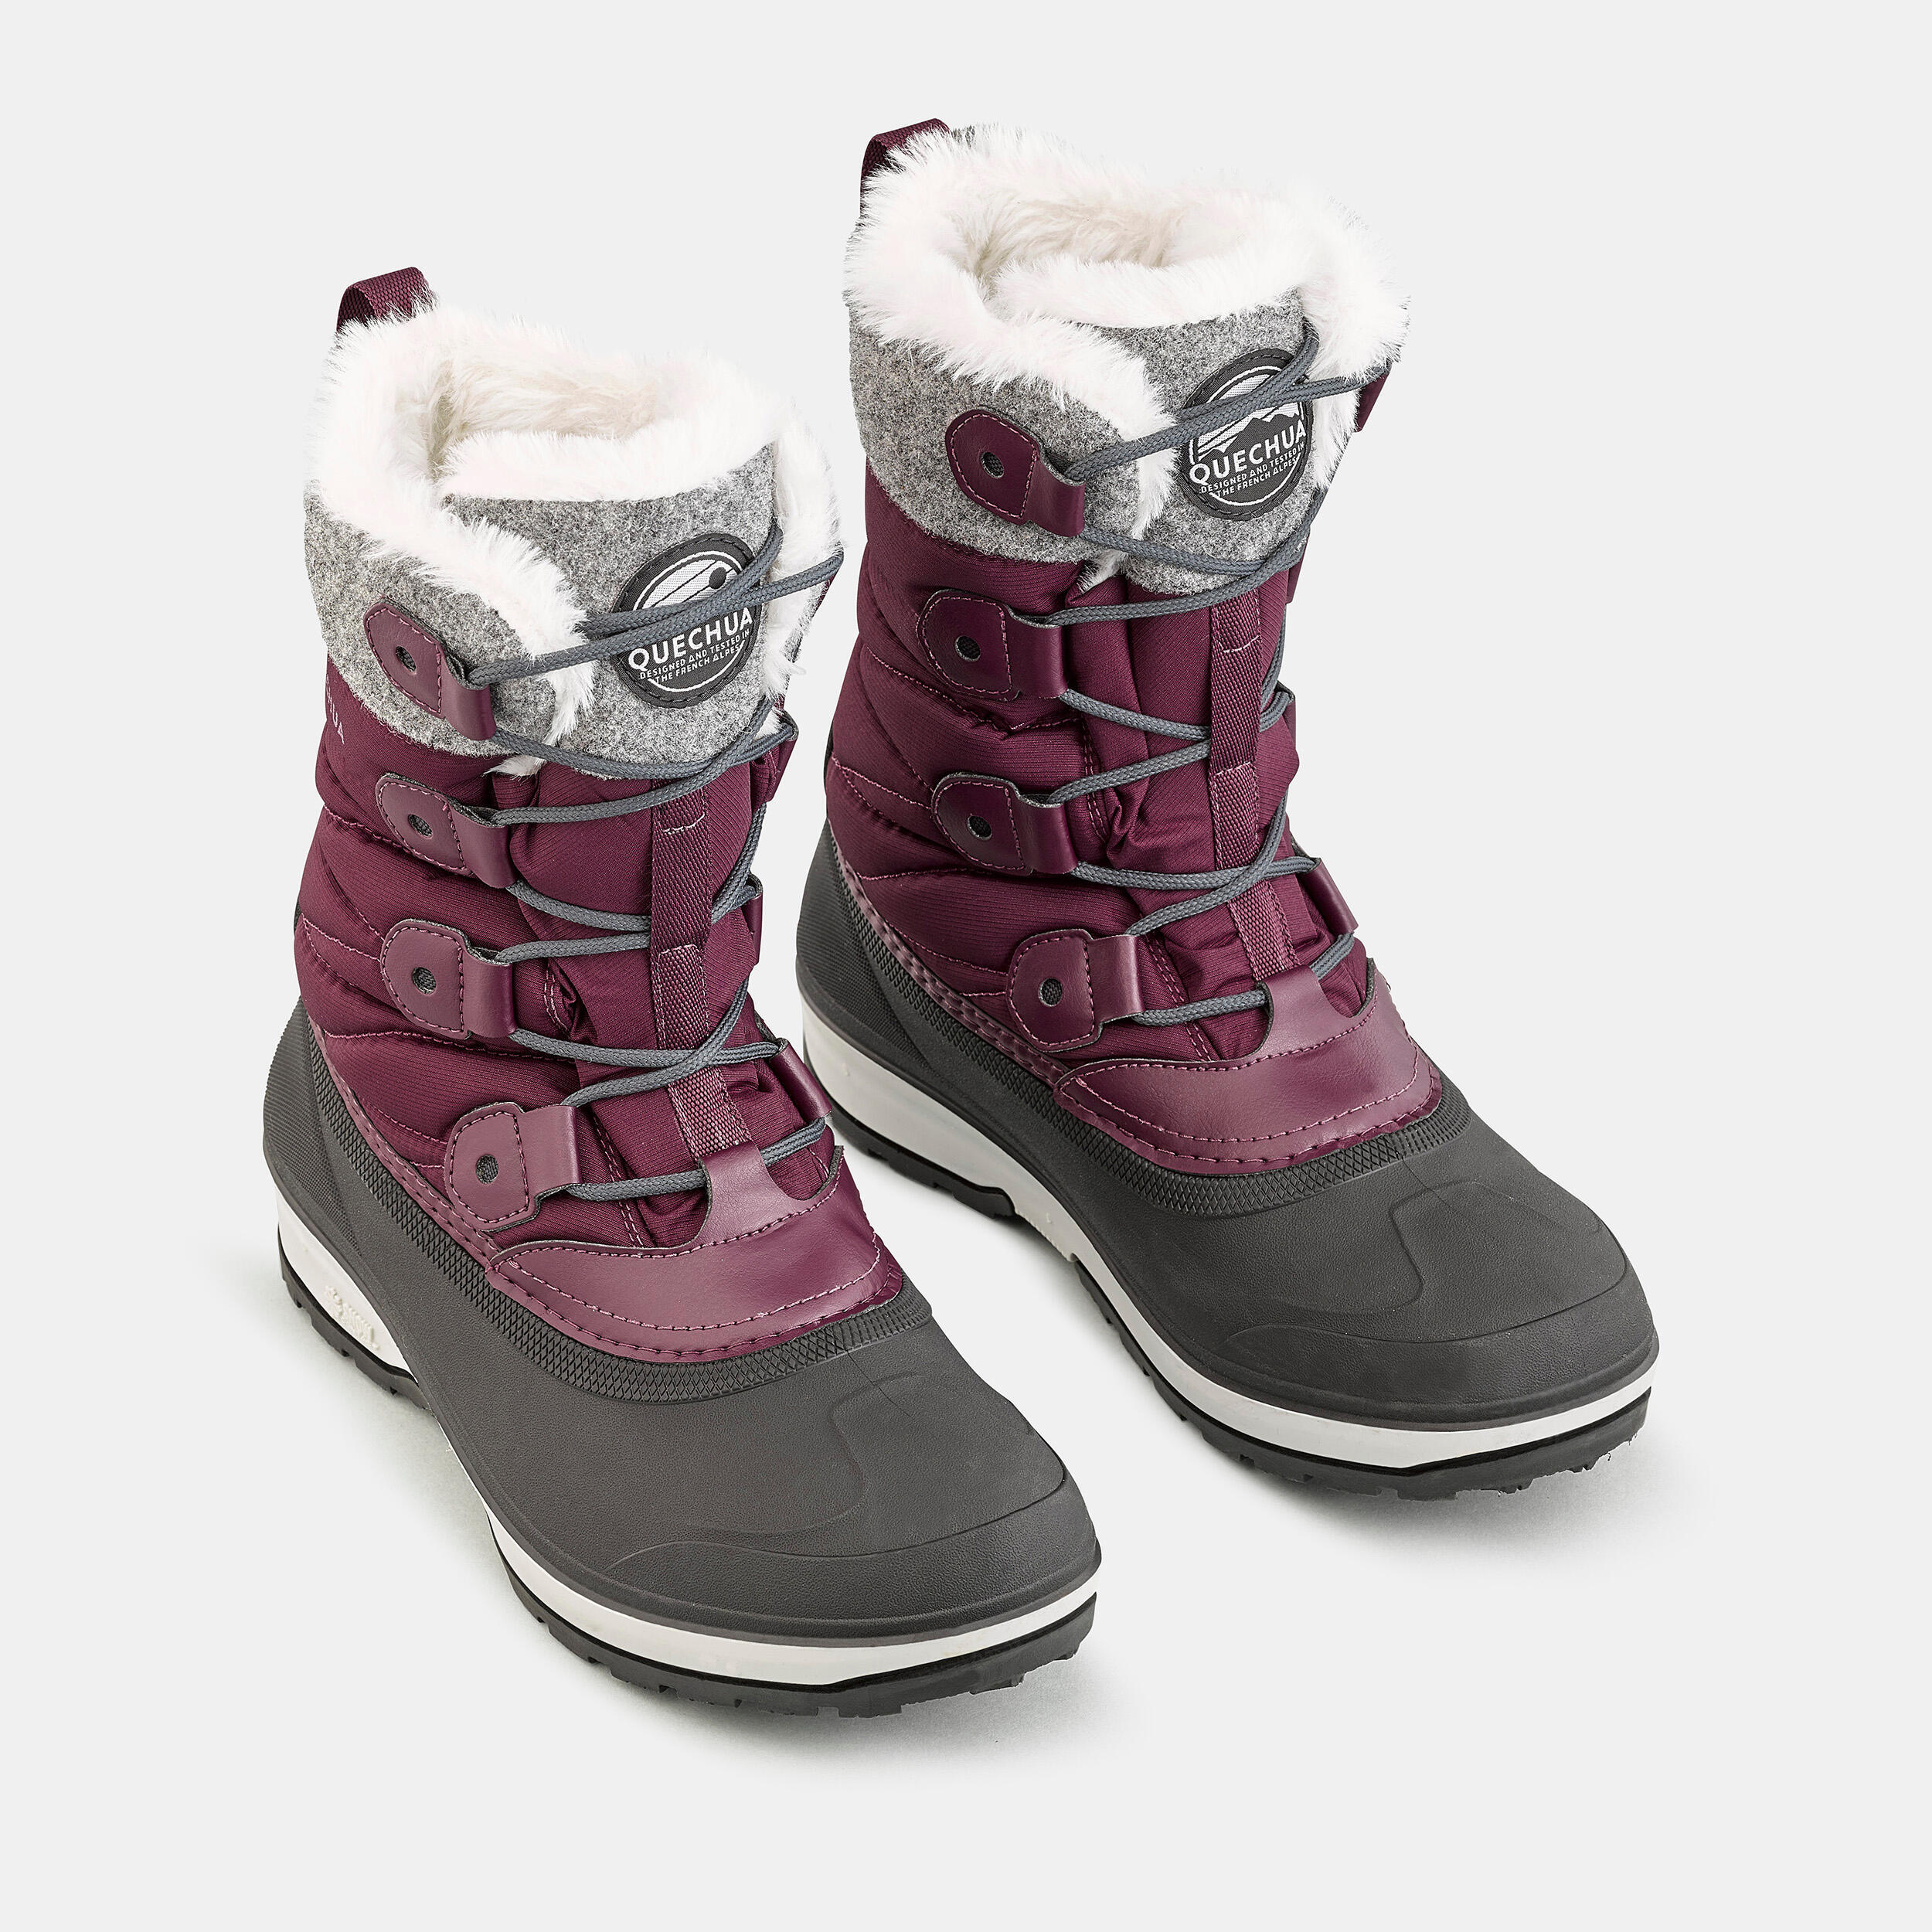 Women's waterproof warm snow boots - SH500 high boot  2/7